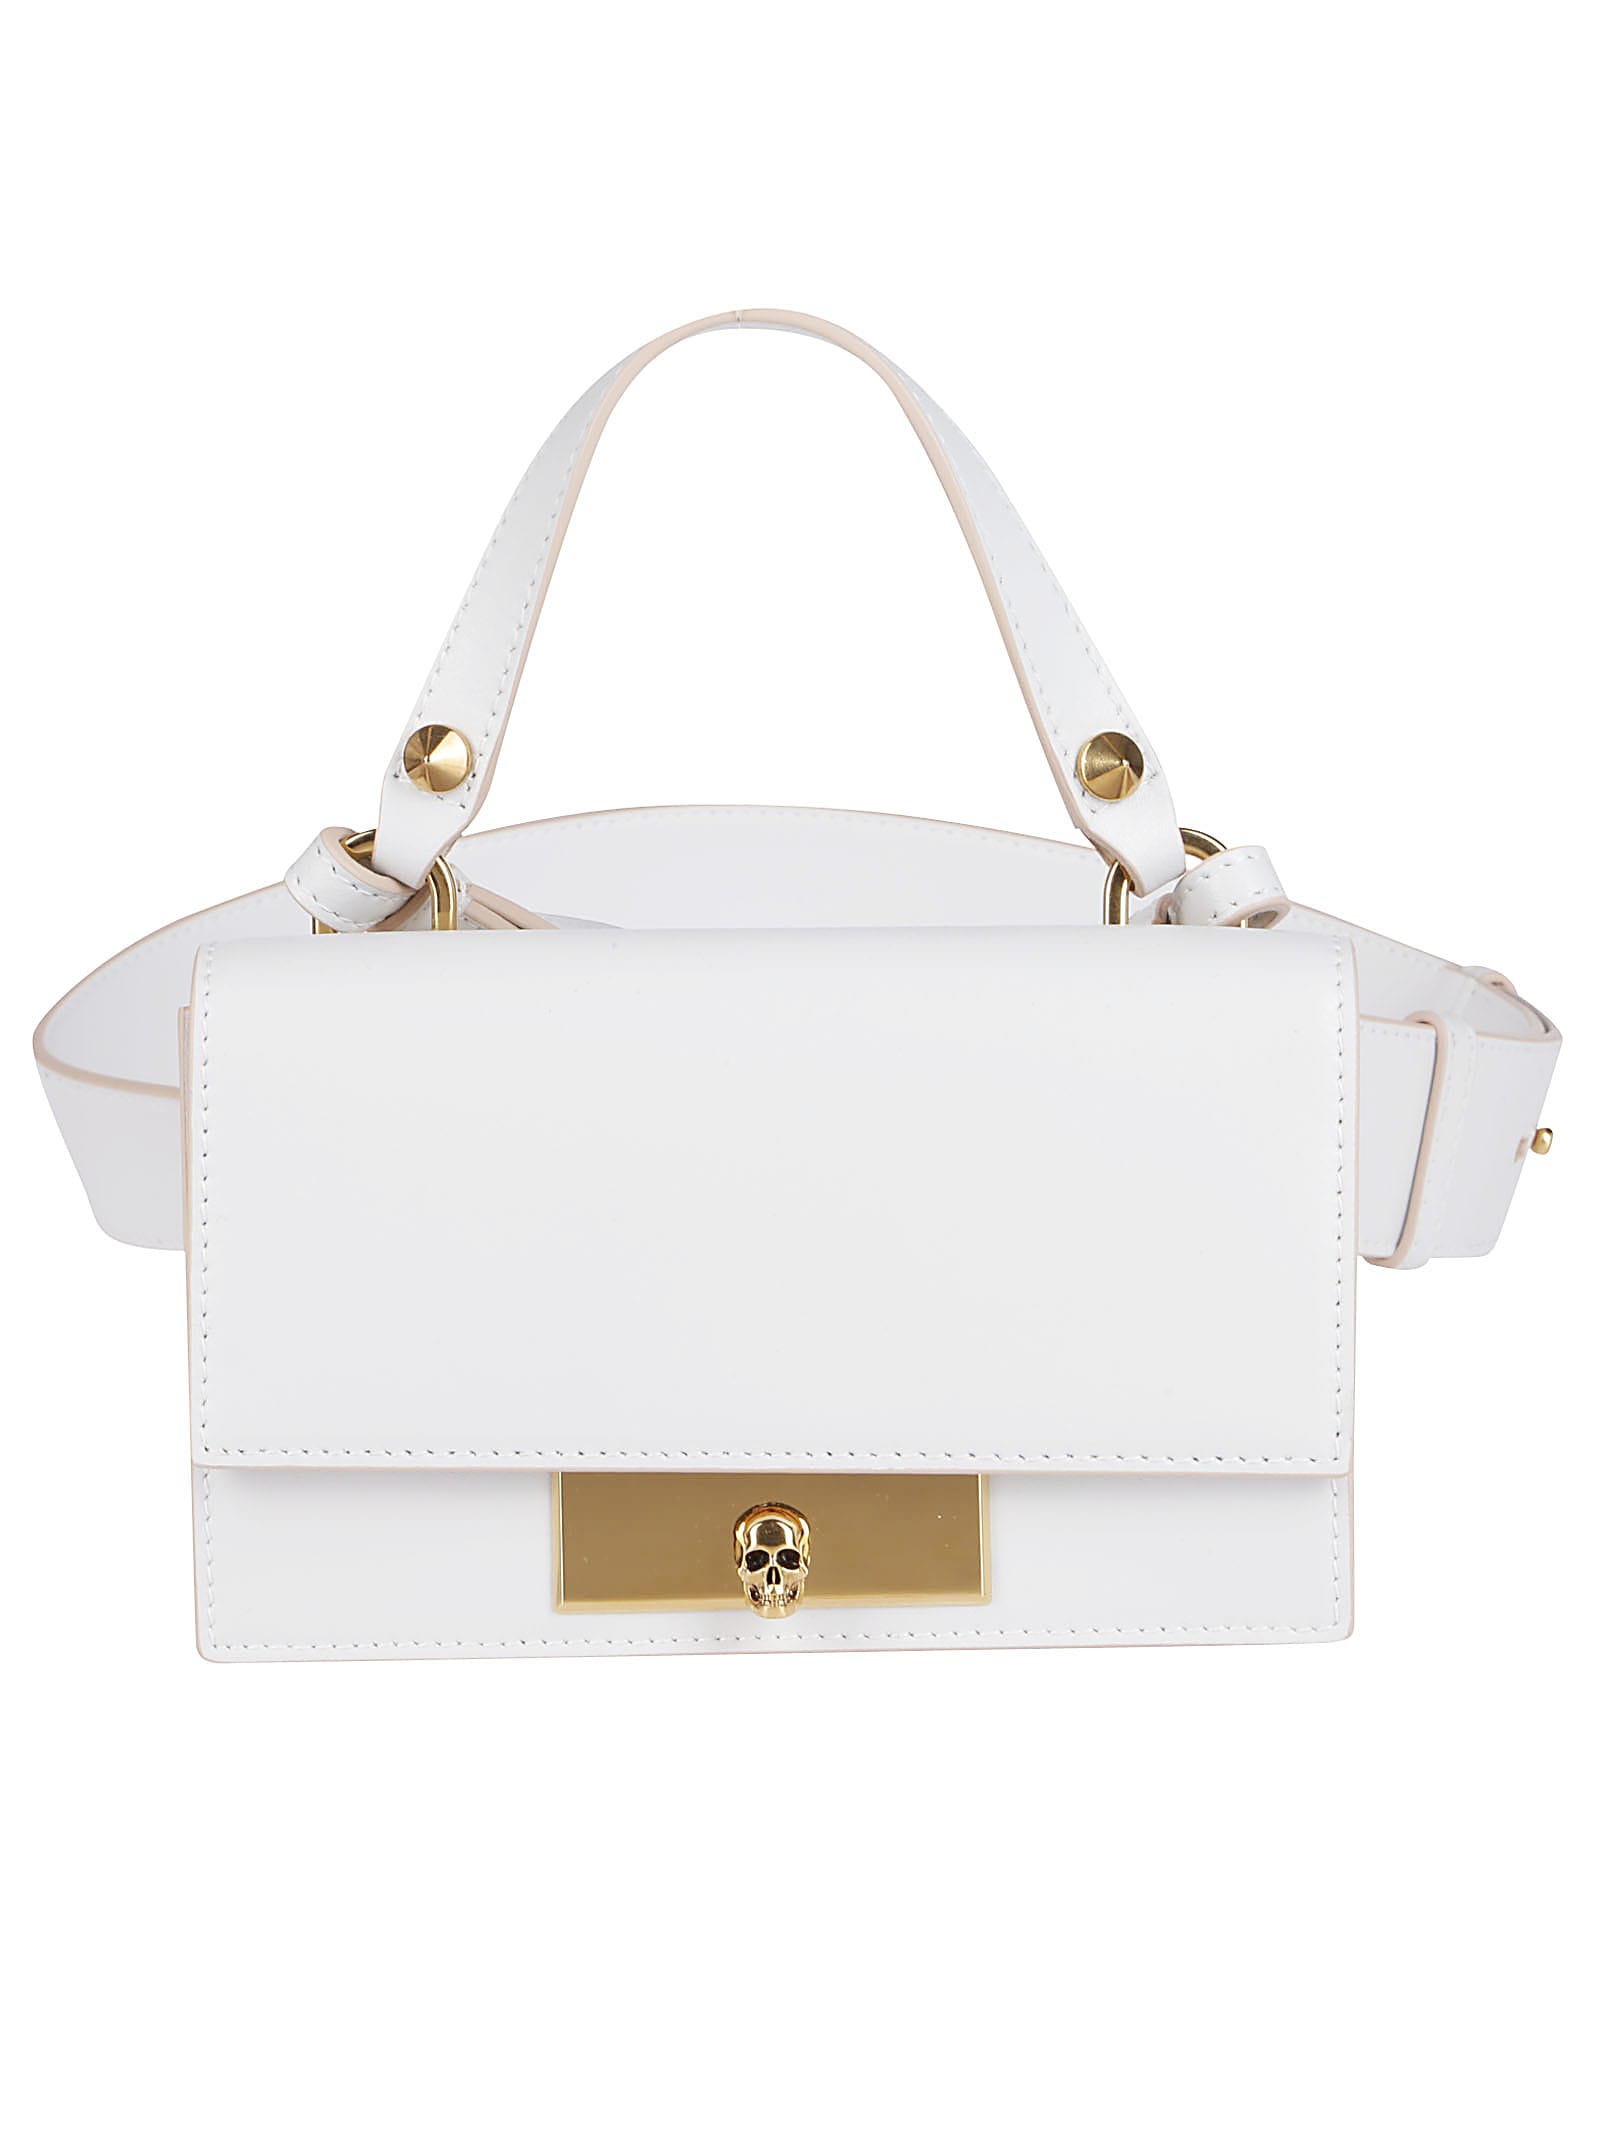 Alexander McQueen White Leather Bag